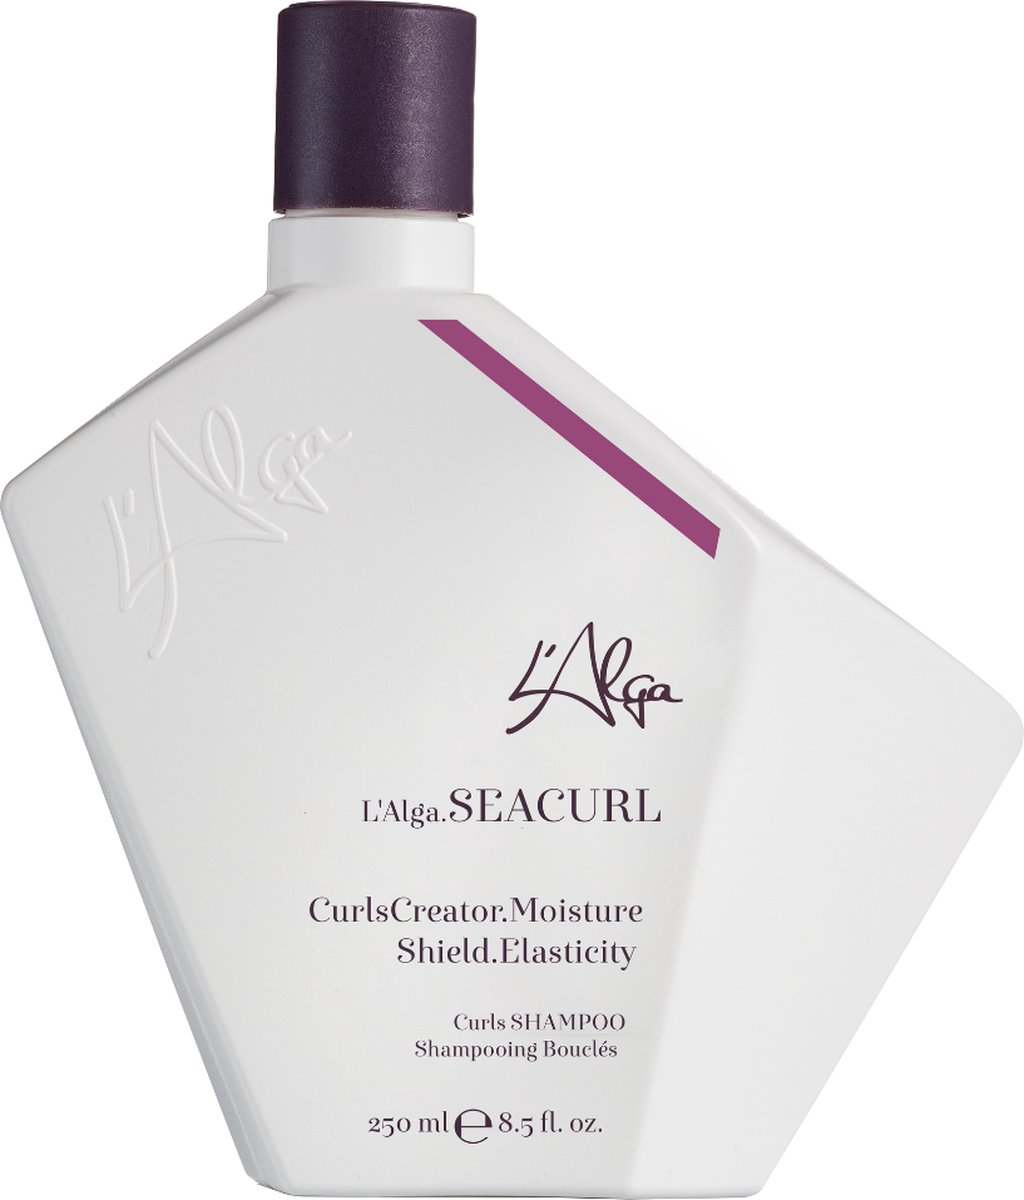 L'Alga SeaCurl Shampoo 250 ml - Normale shampoo vrouwen - Voor Alle haartypes